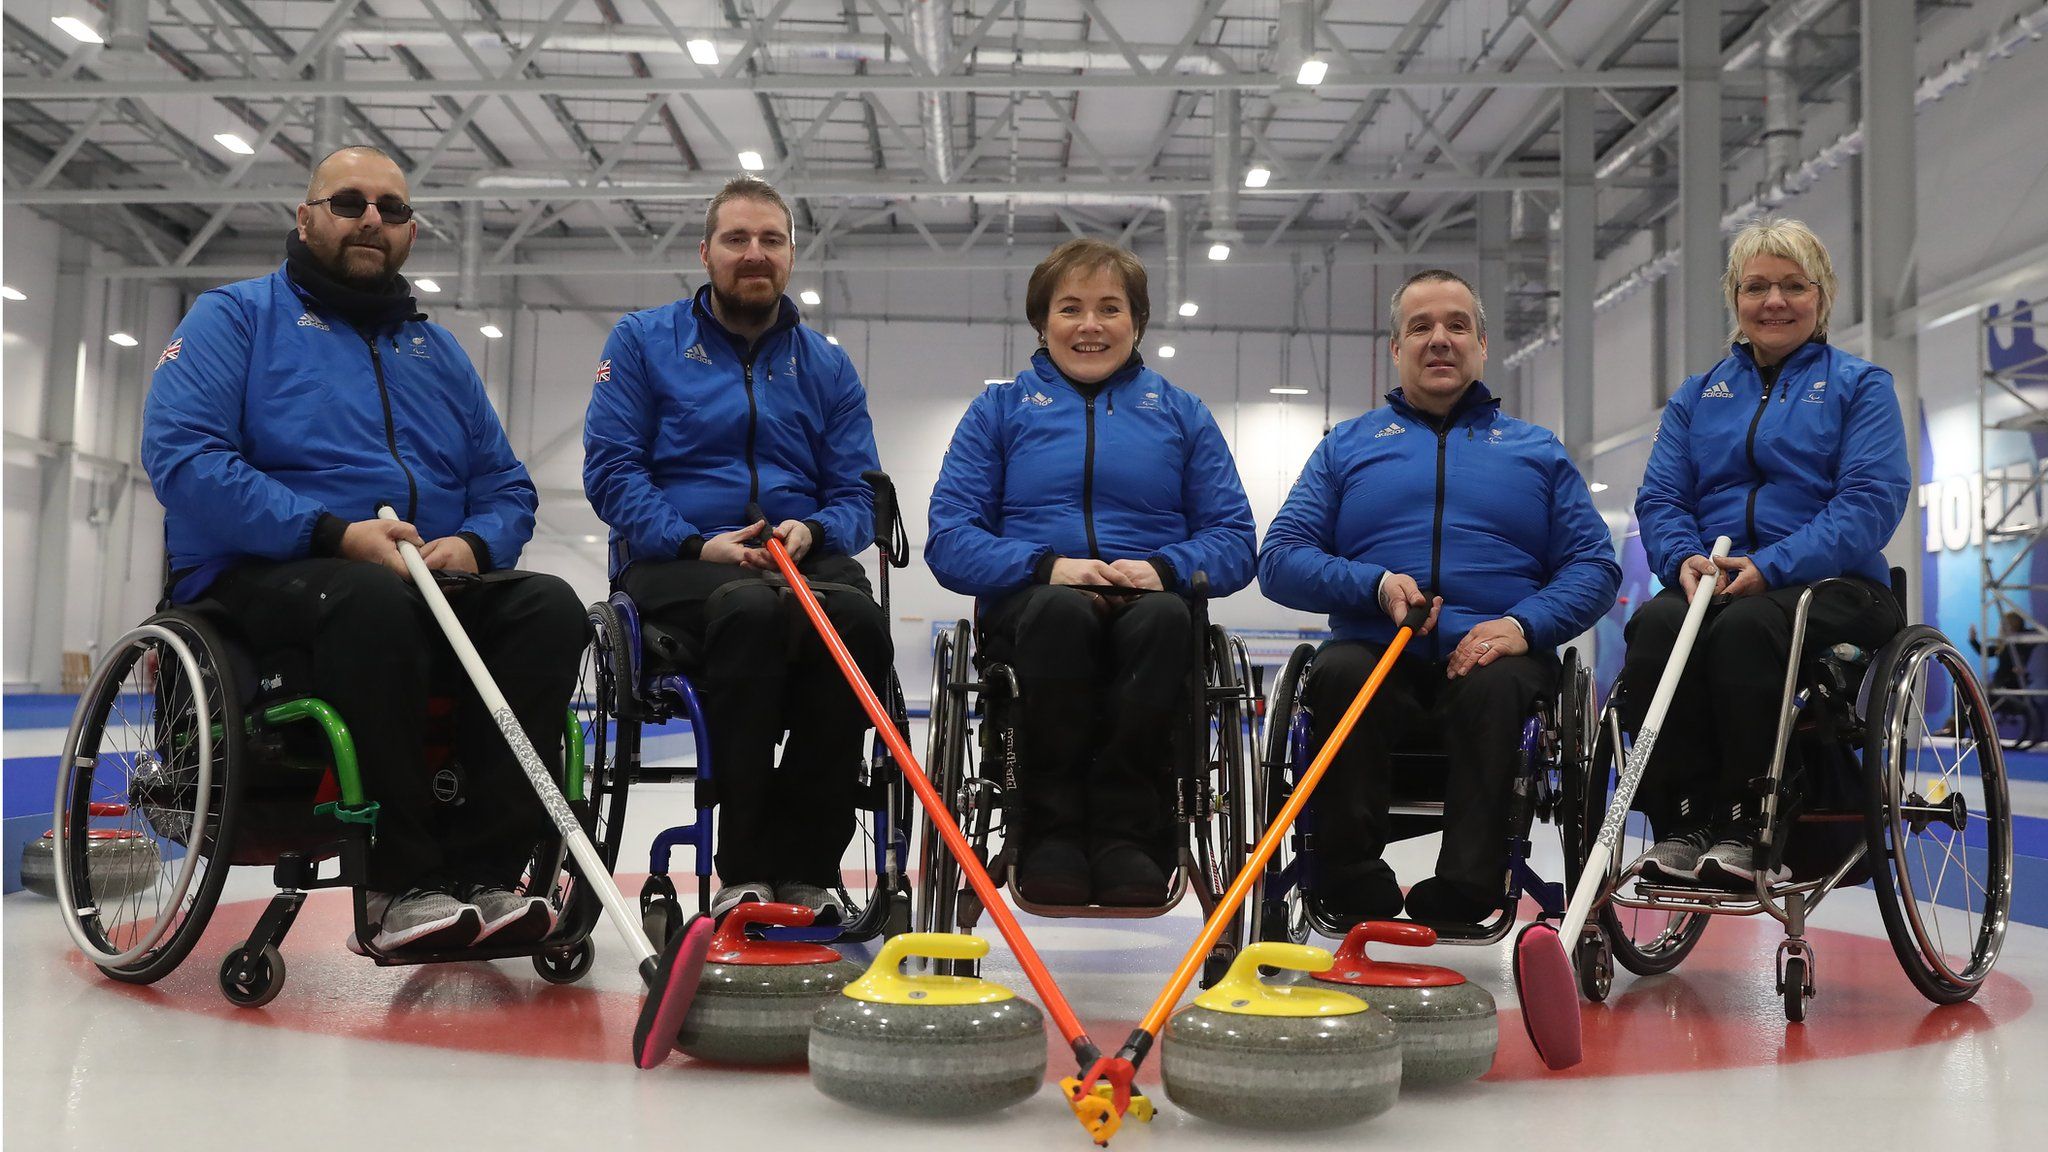 The GB wheelchair curling team